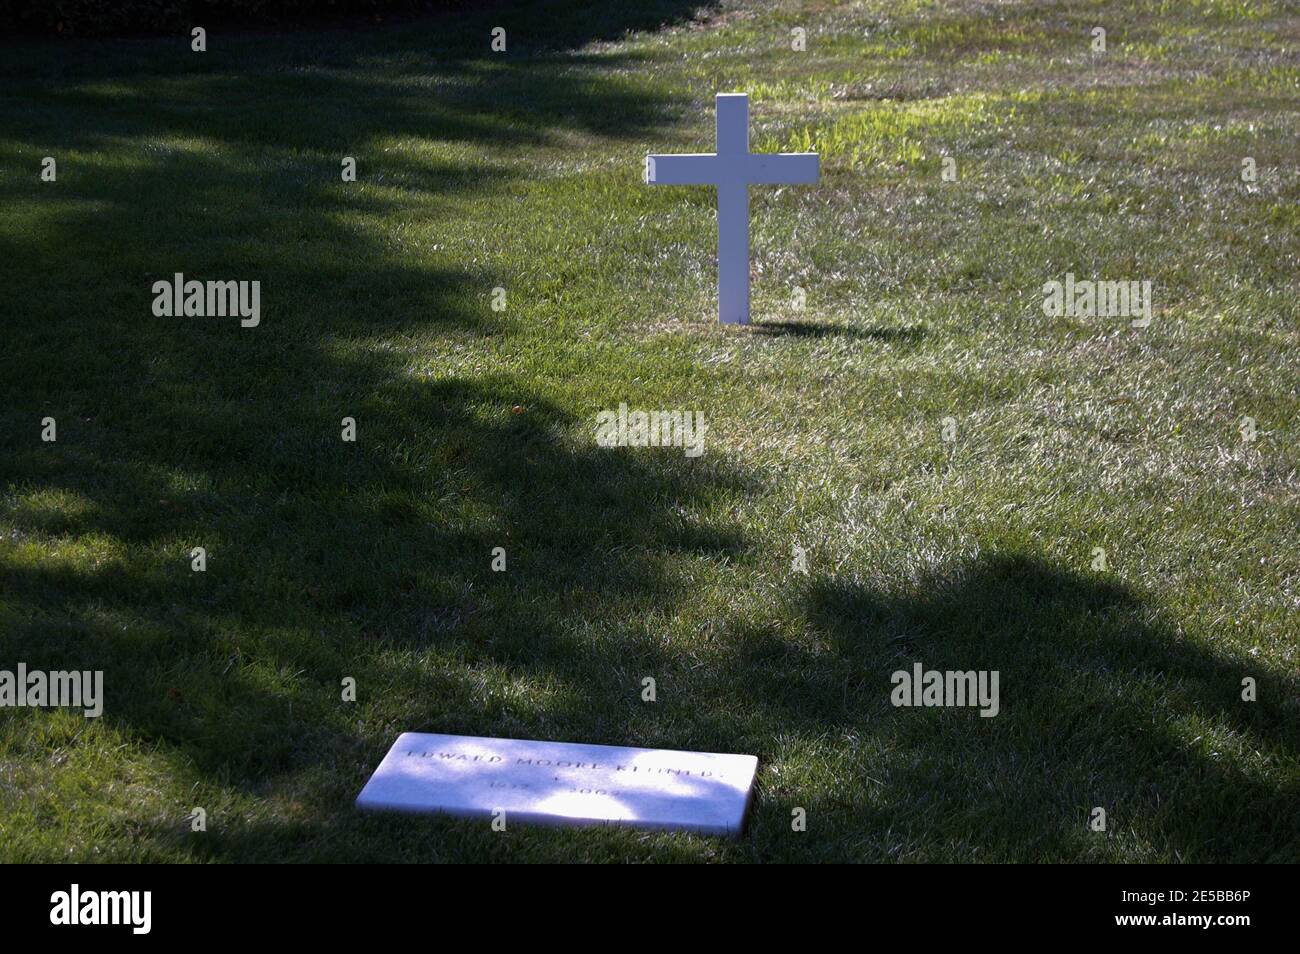 Tomba di Robert Kennedys cimitero di Arlington Washington DC targa croce sepolta su erba storica uccisa assassinata segnata Foto Stock